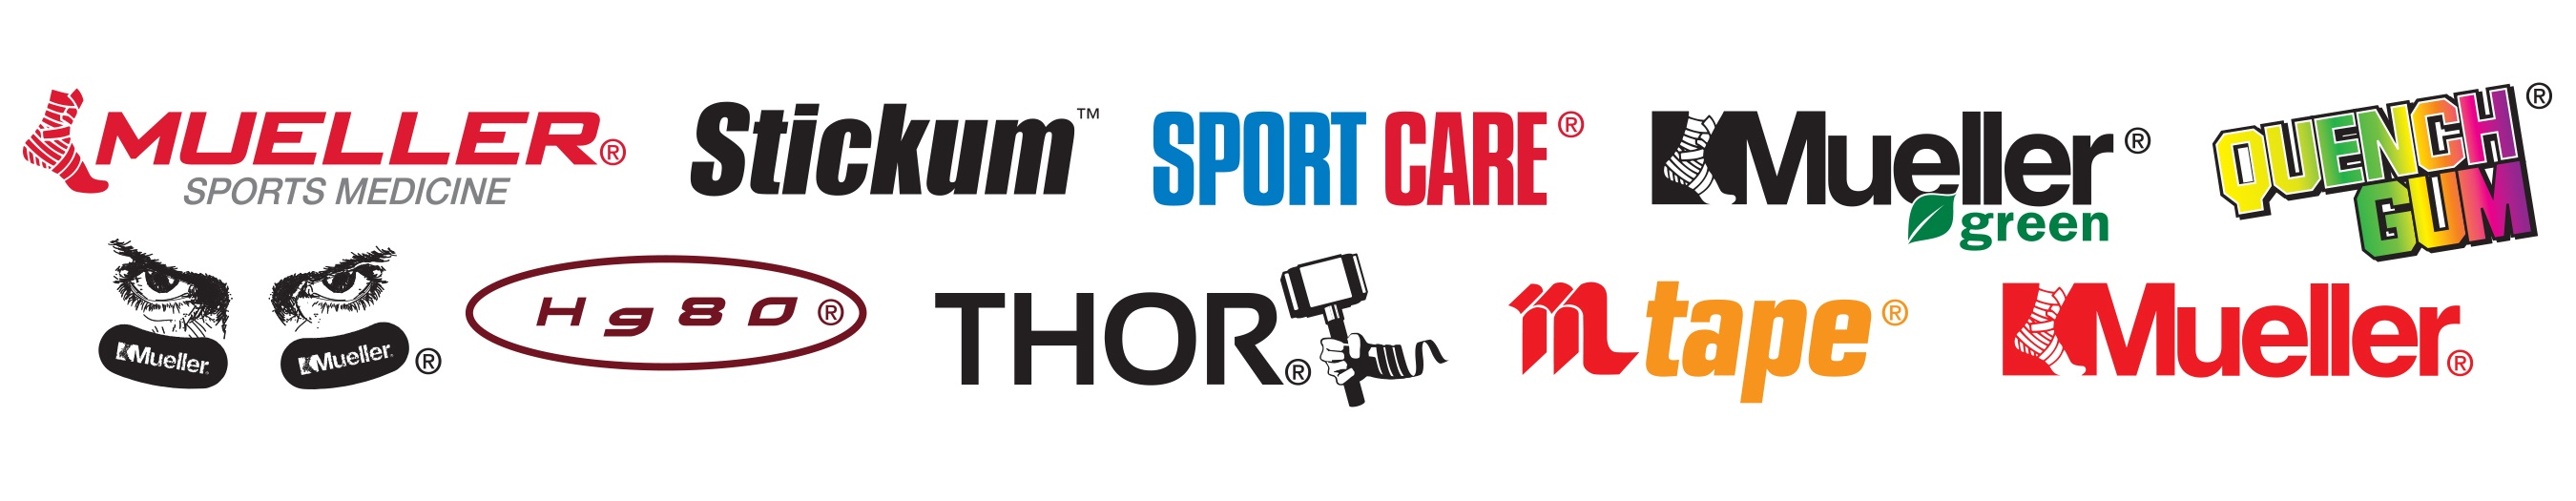 Mueller Sports Medicine Brand Logos